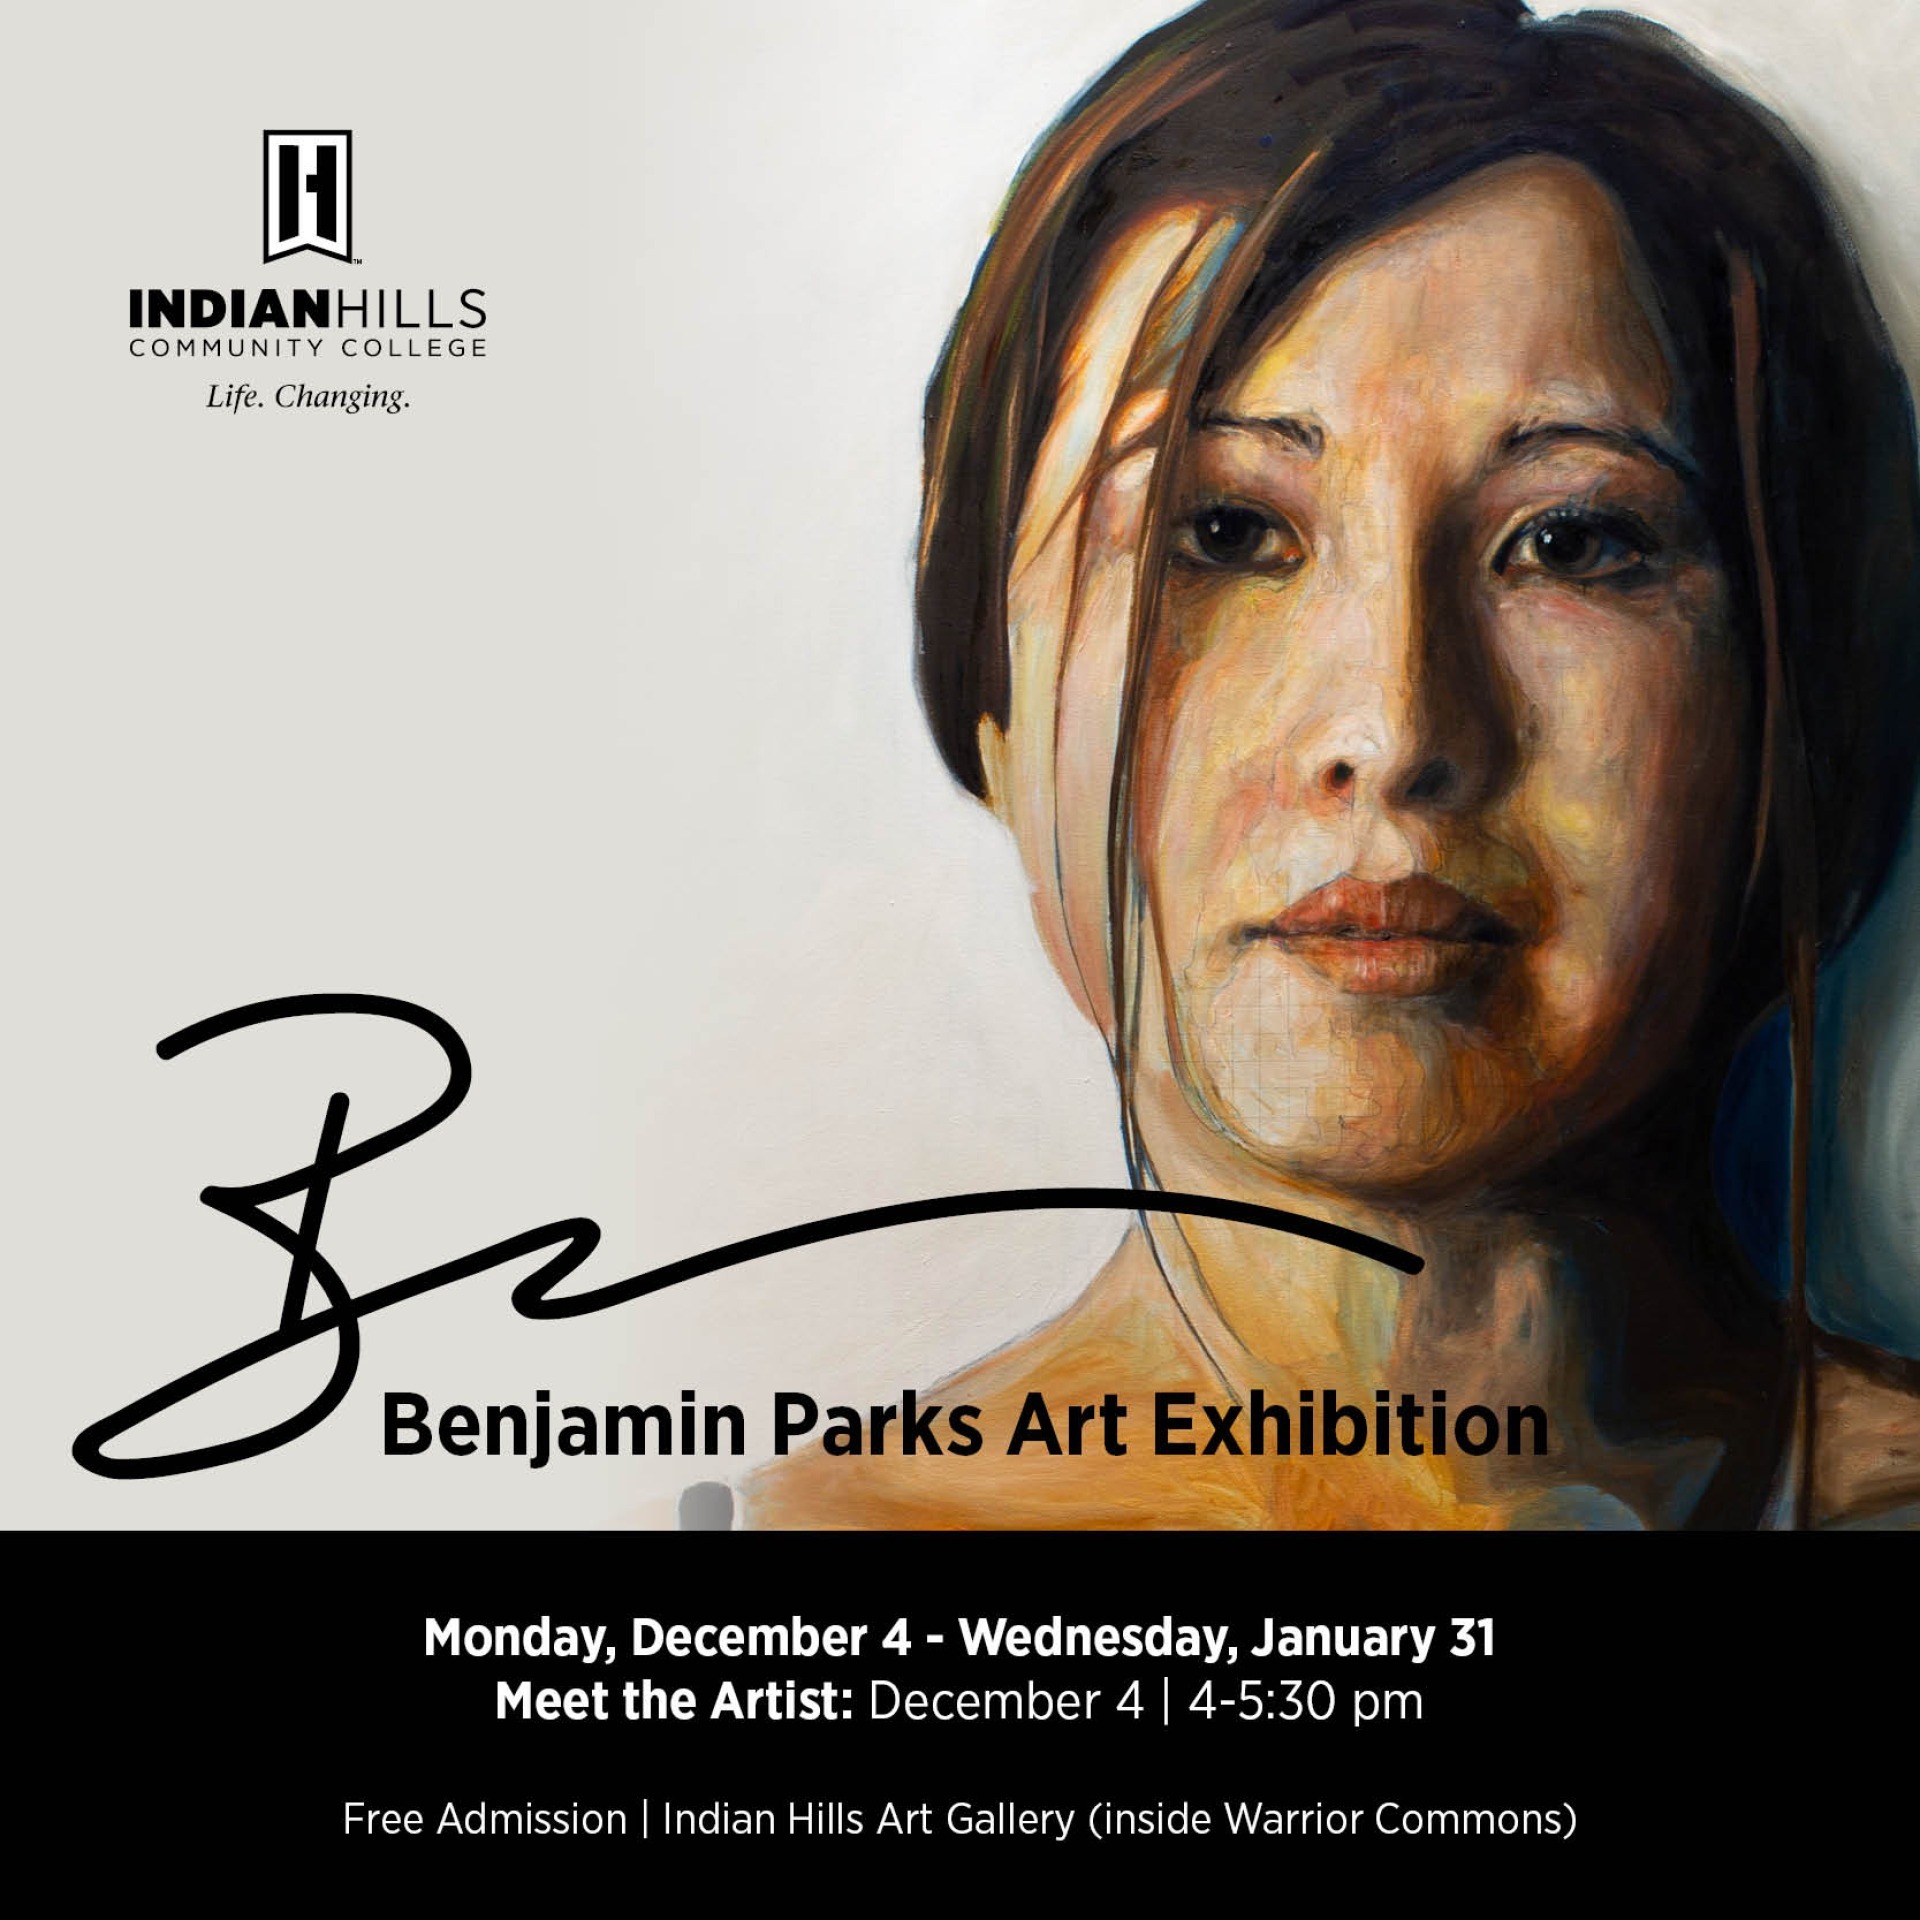 Benjamin Parks Art Exhibition